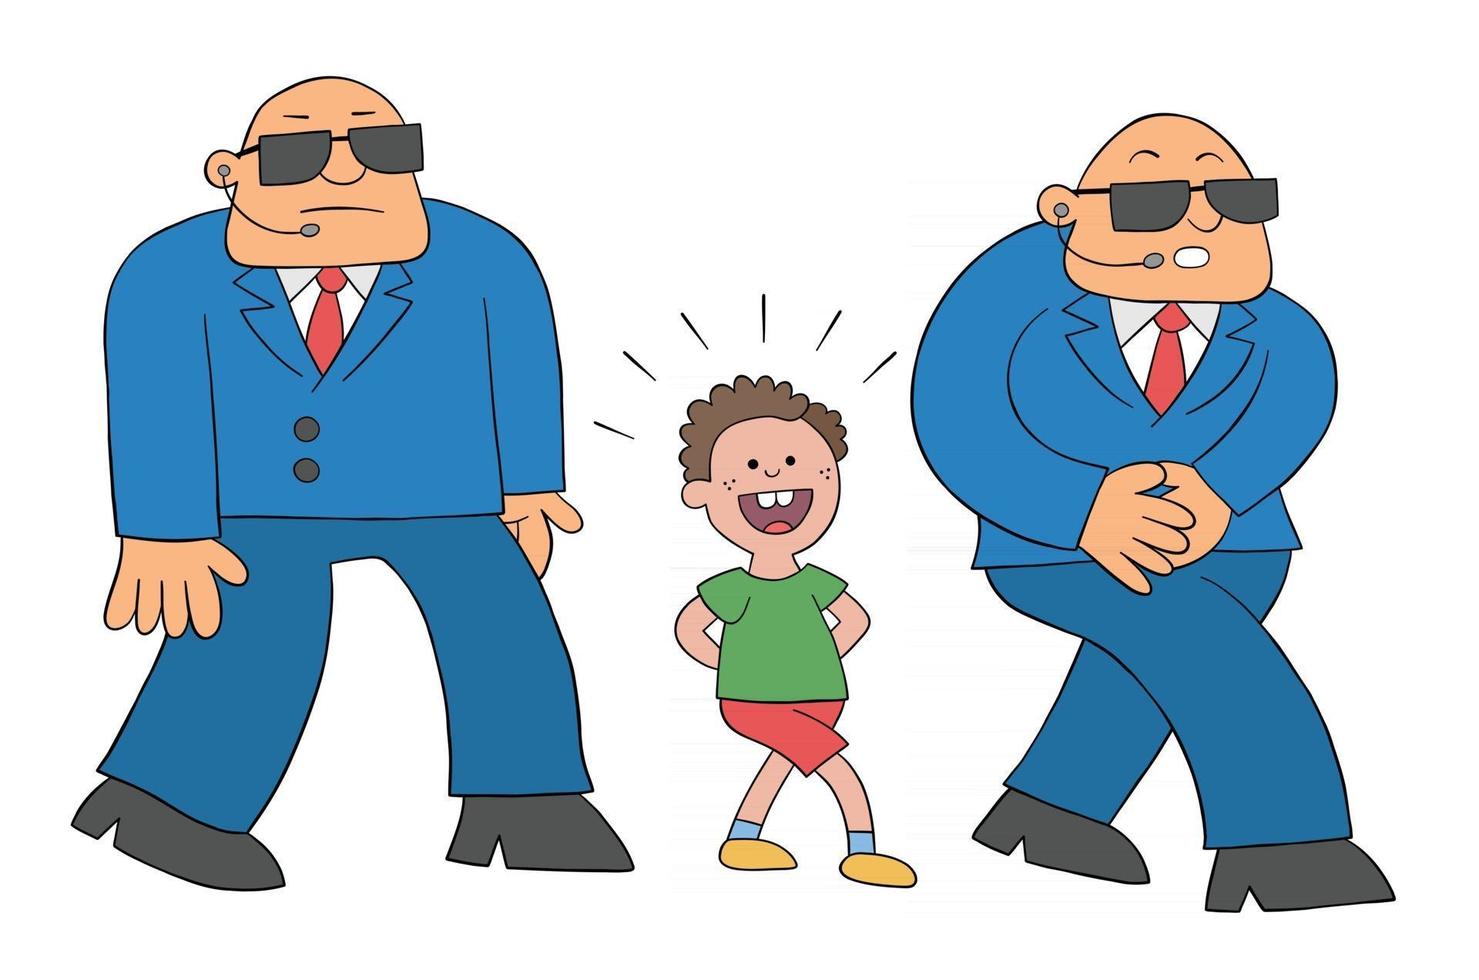 dessin animé petit garçon se promenant avec 2 gardes effrayants vector illustration